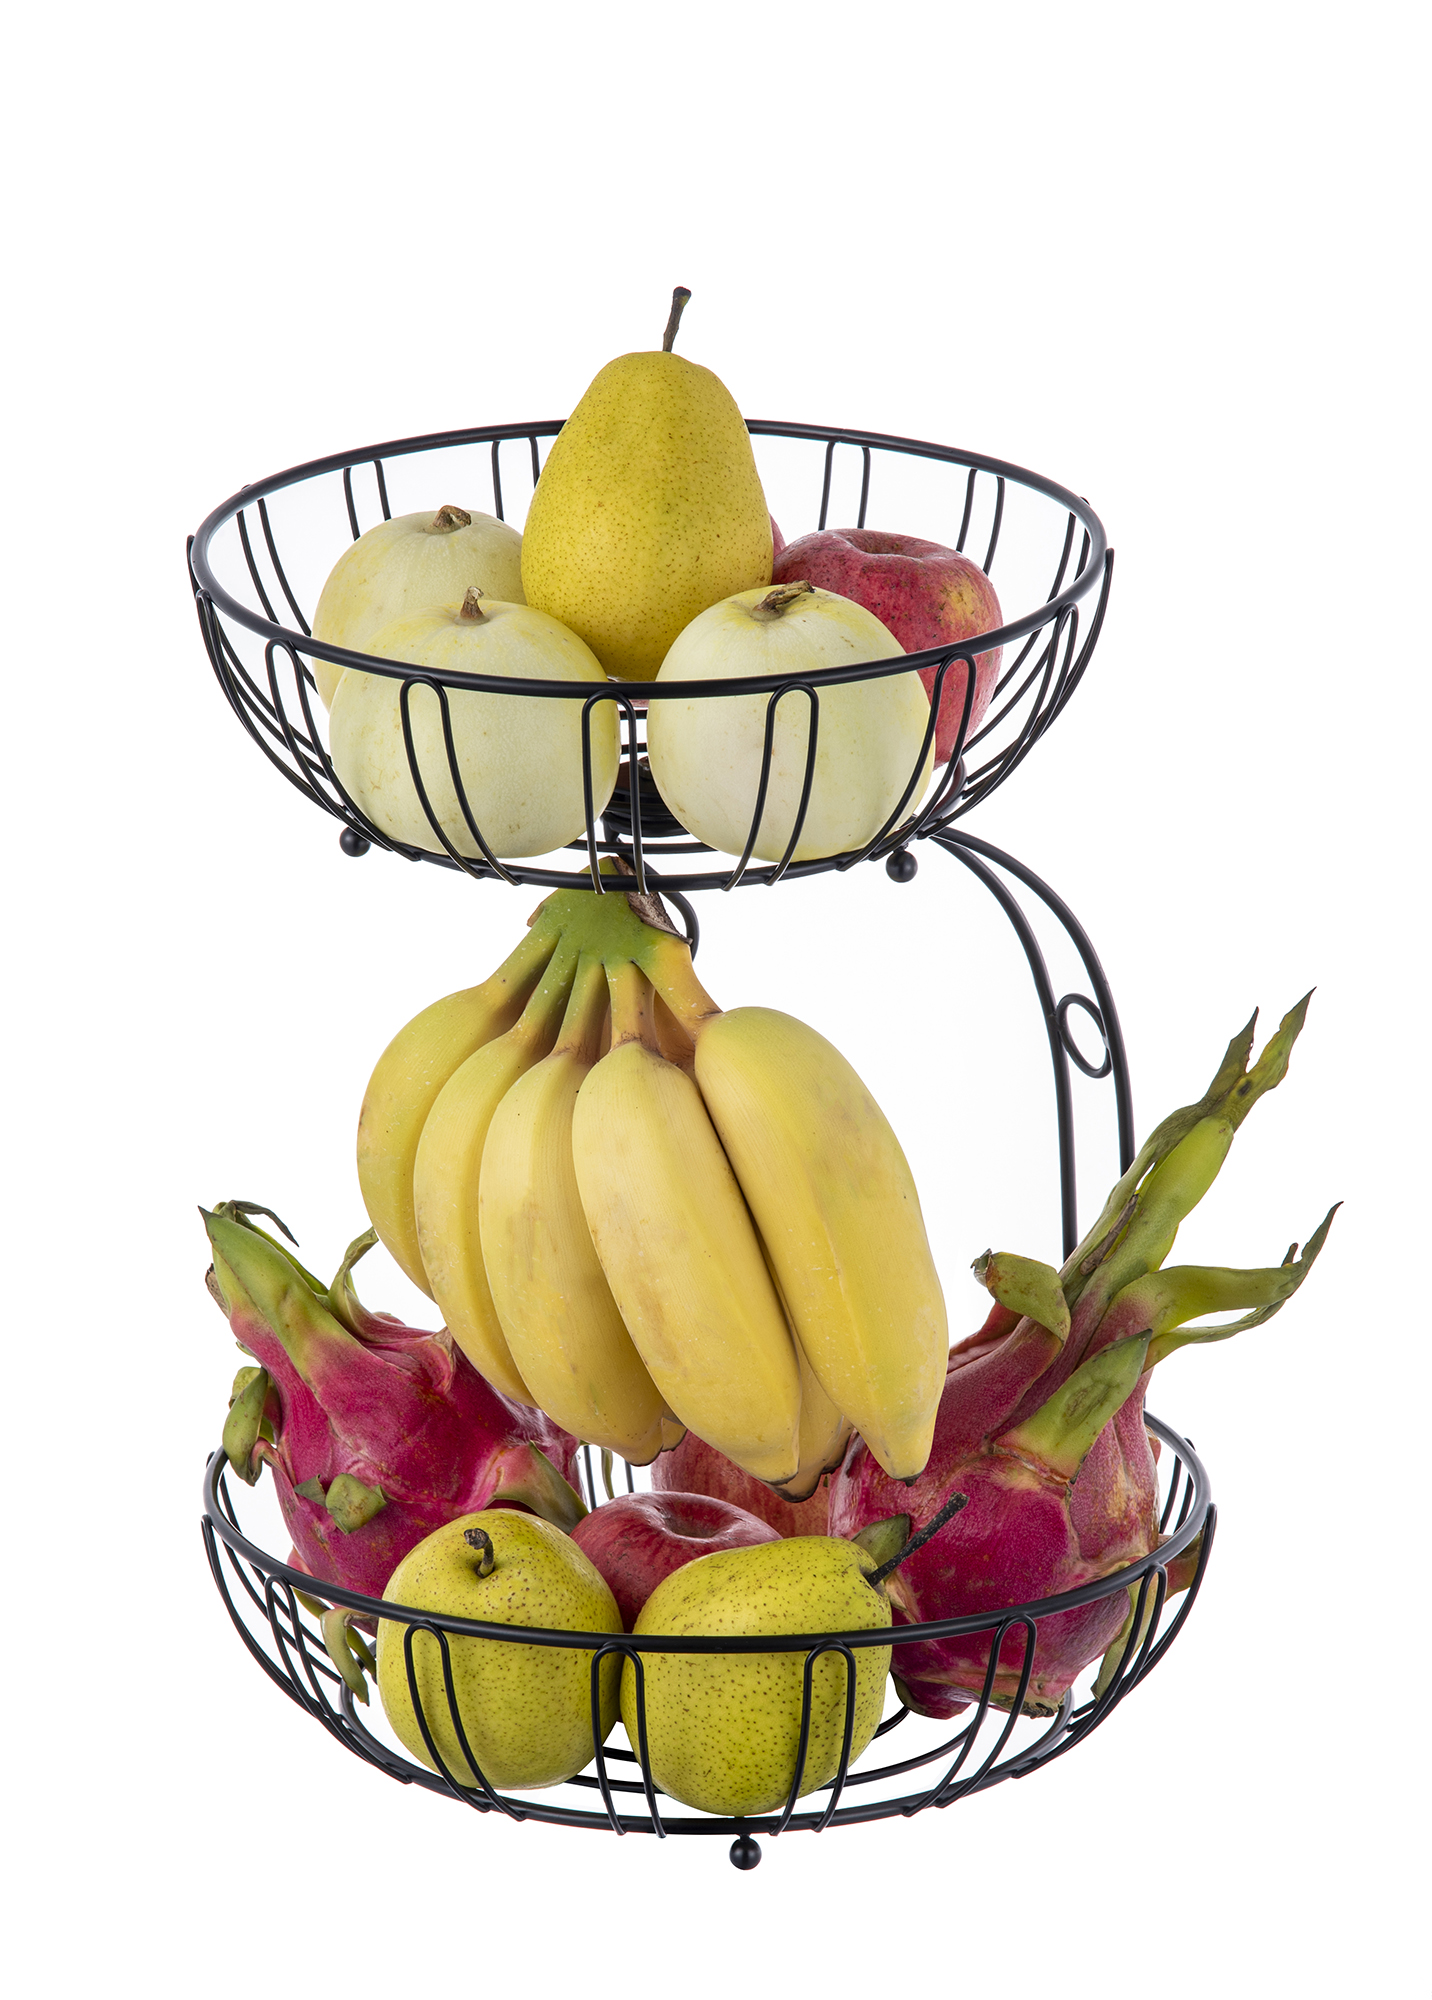 Двойная фруктовая корзина с бананом.mp4